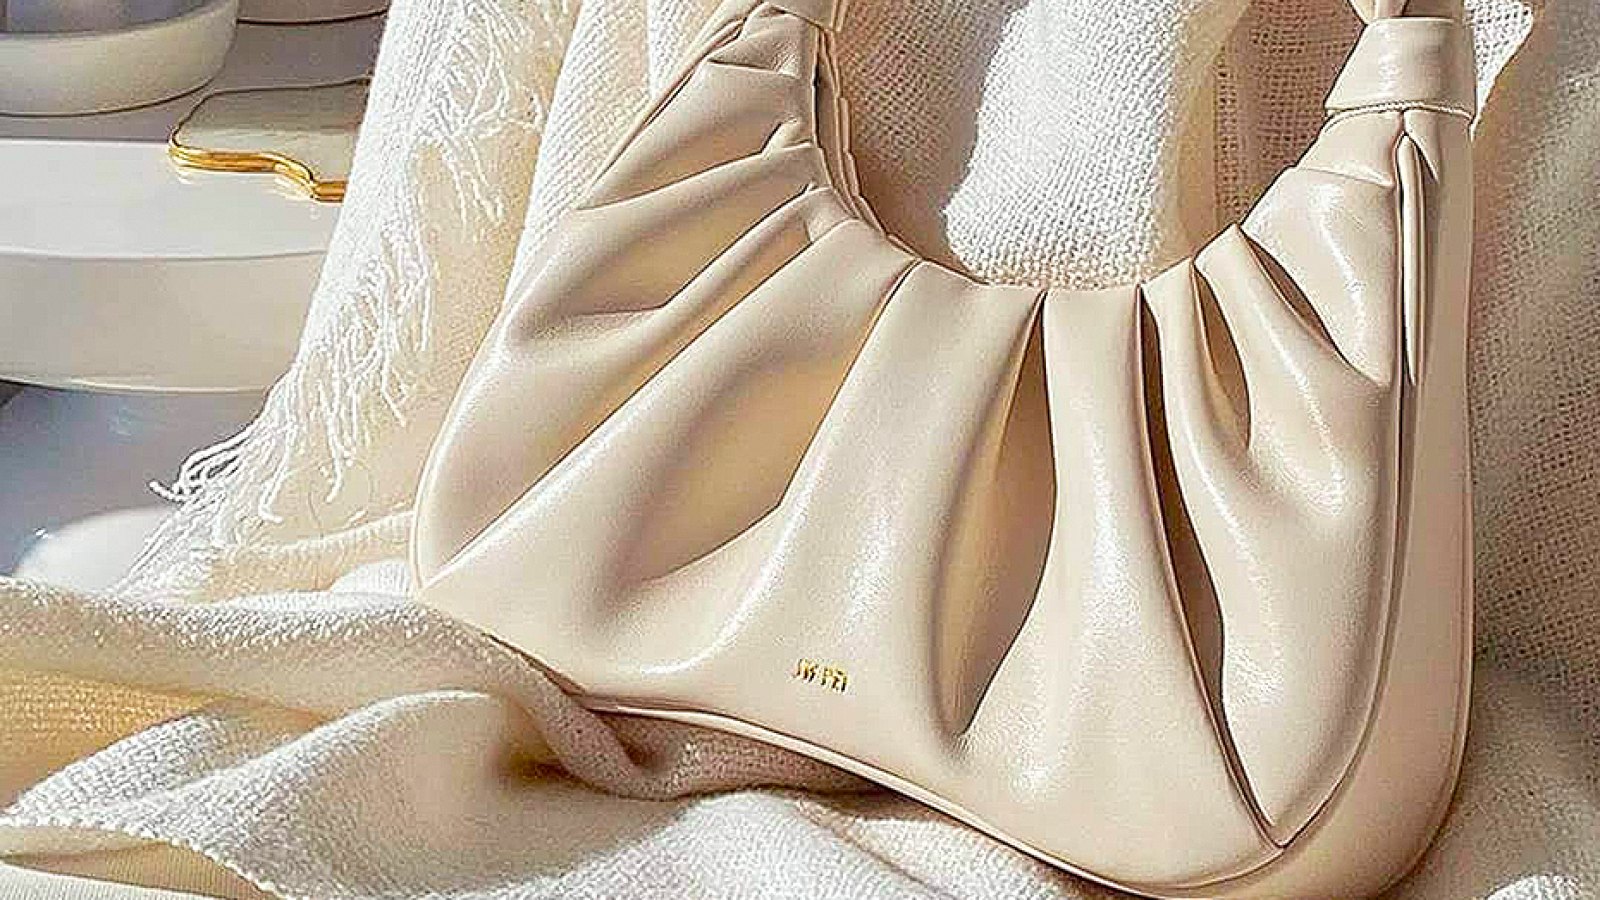 Celebrities love JW Pei's under-$100 'Gabbi' bag